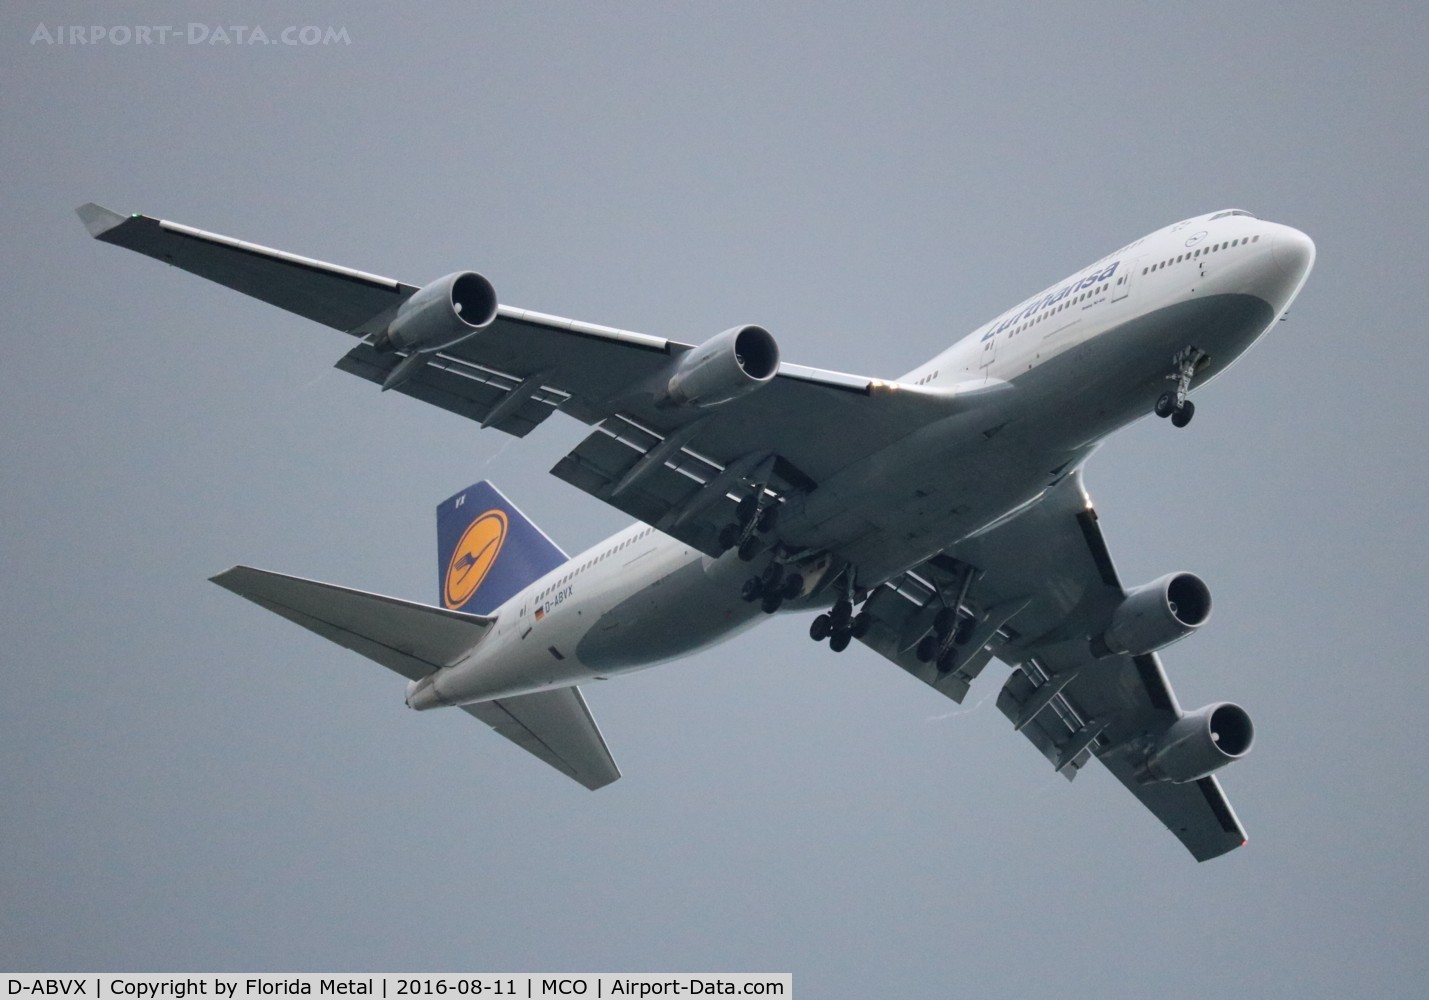 D-ABVX, 1999 Boeing 747-430 C/N 29868, Lufthansa